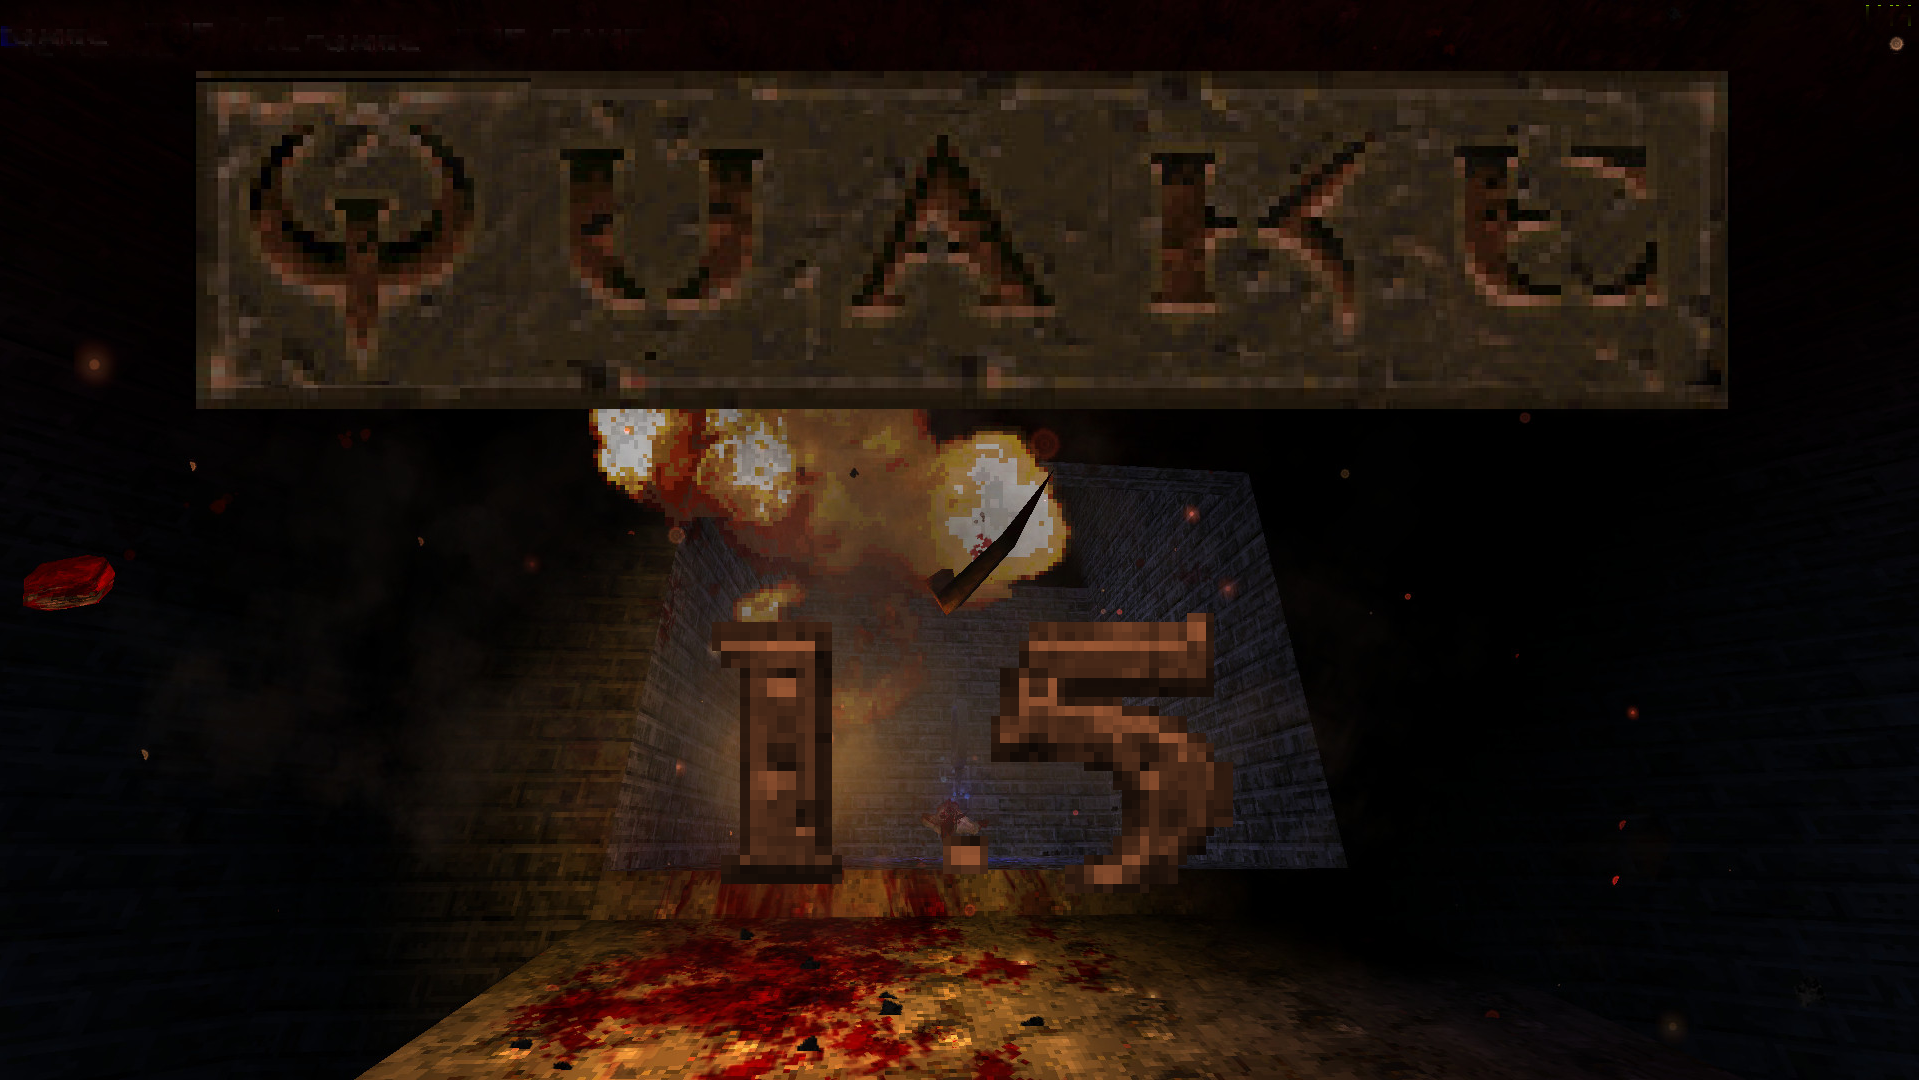 quake 1 download full version free youtube